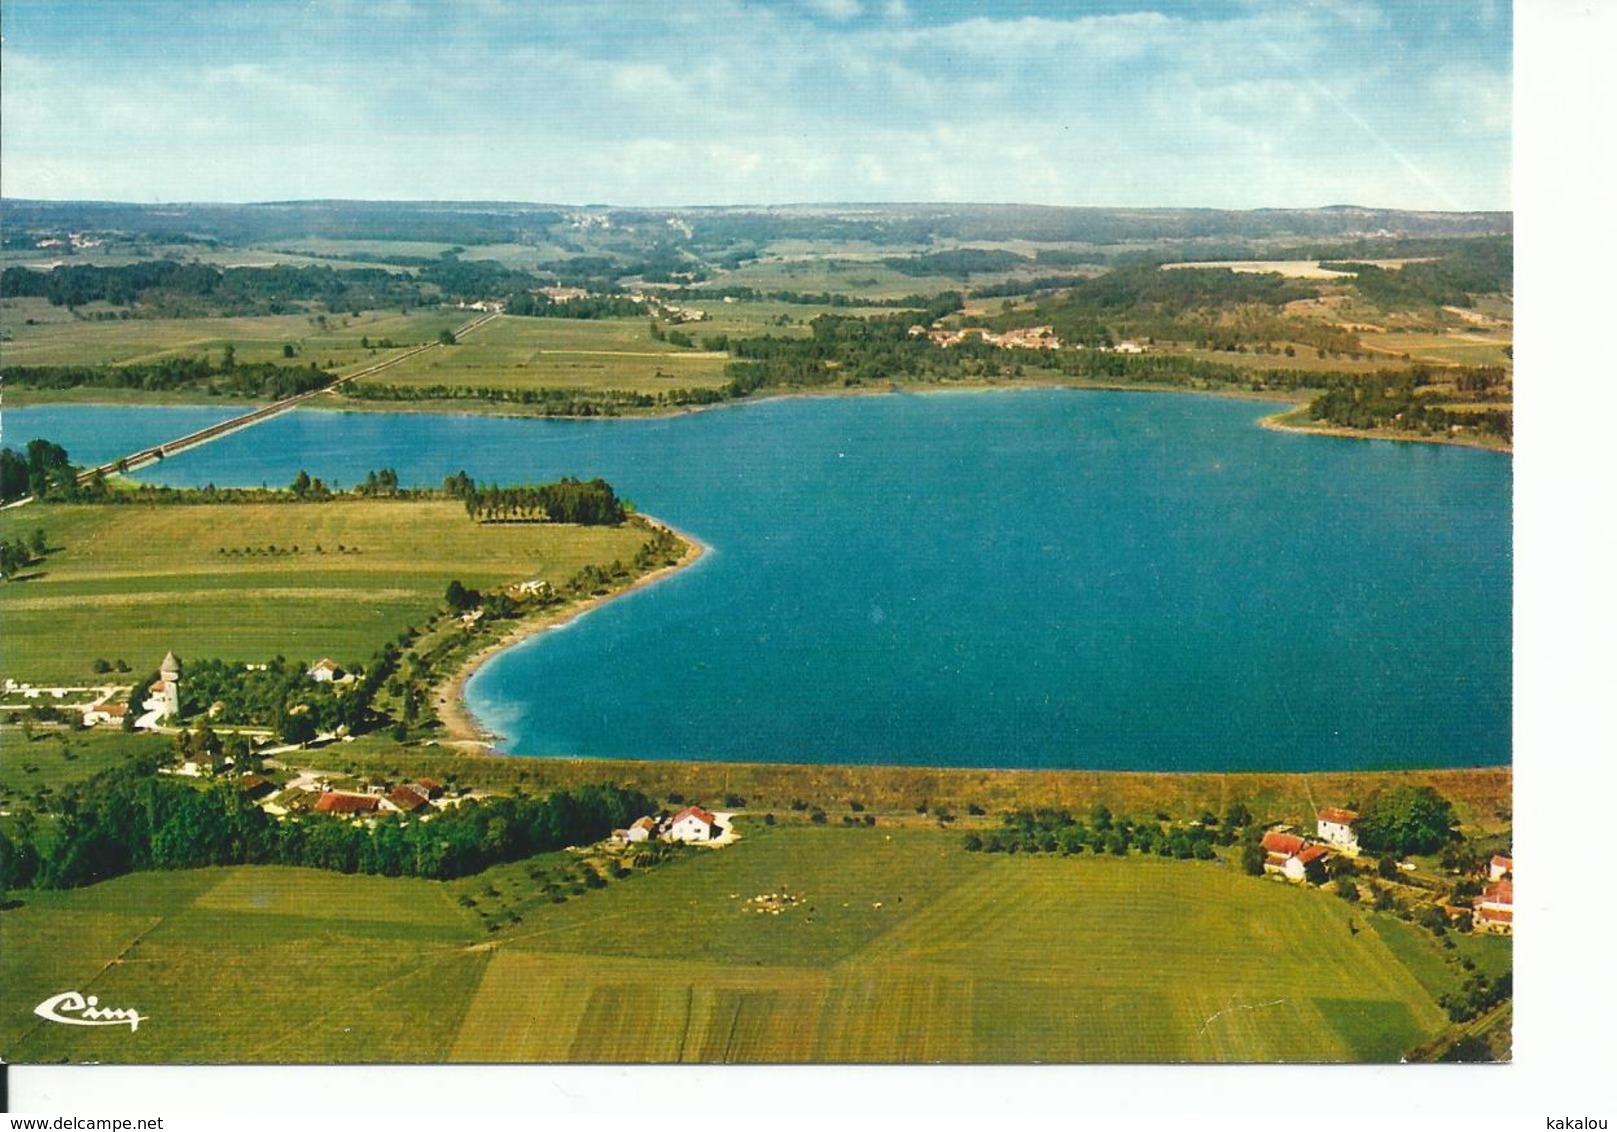 LONGEAU (52) Réservoir De La Vingeanne - Le Vallinot Longeau Percey